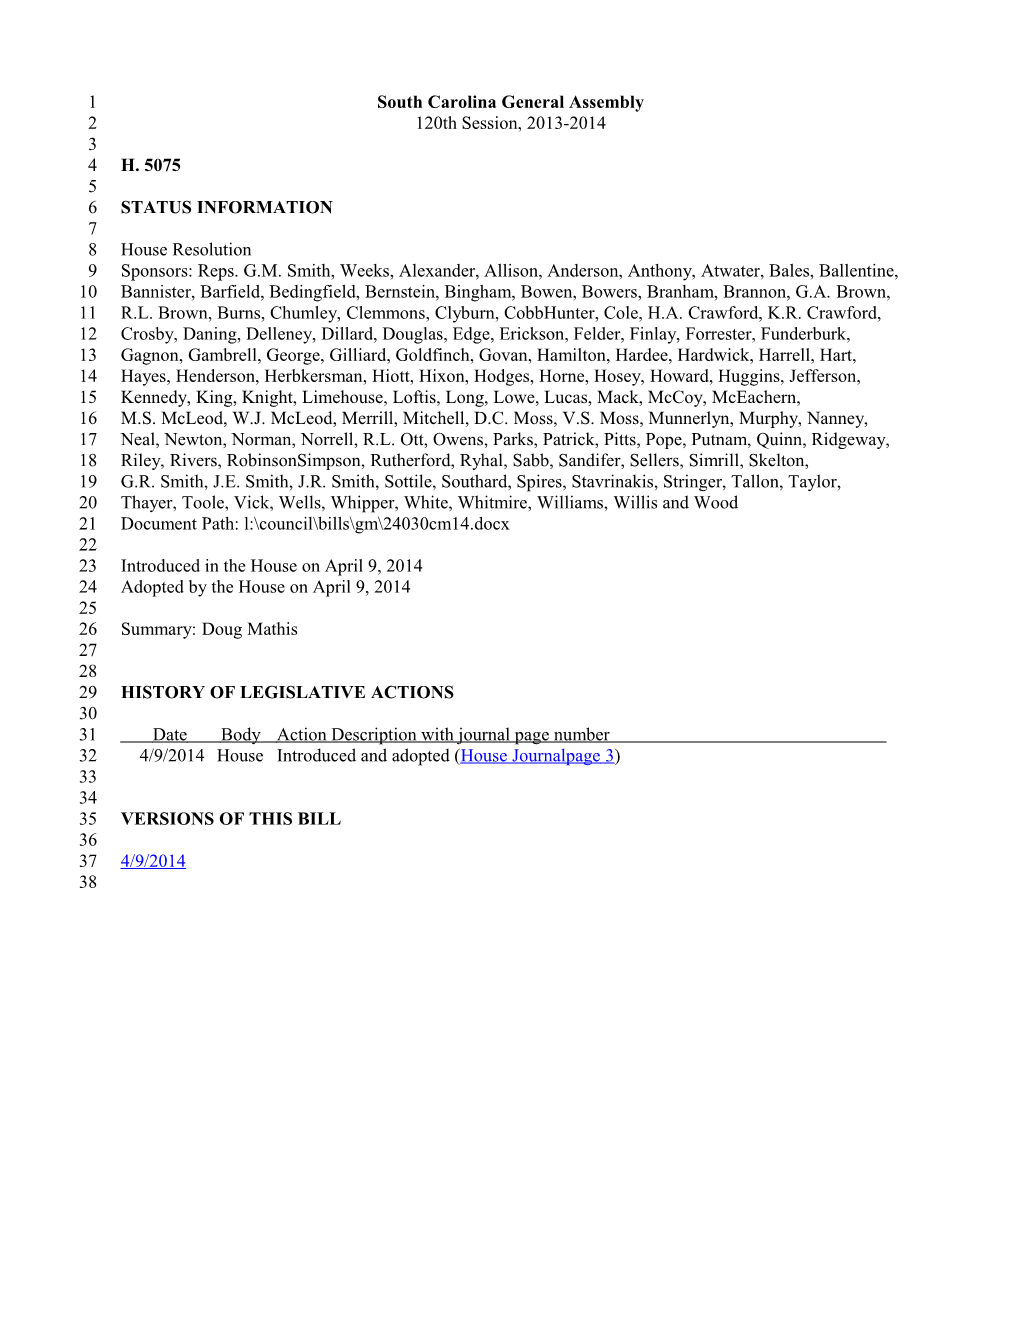 2013-2014 Bill 5075: Doug Mathis - South Carolina Legislature Online